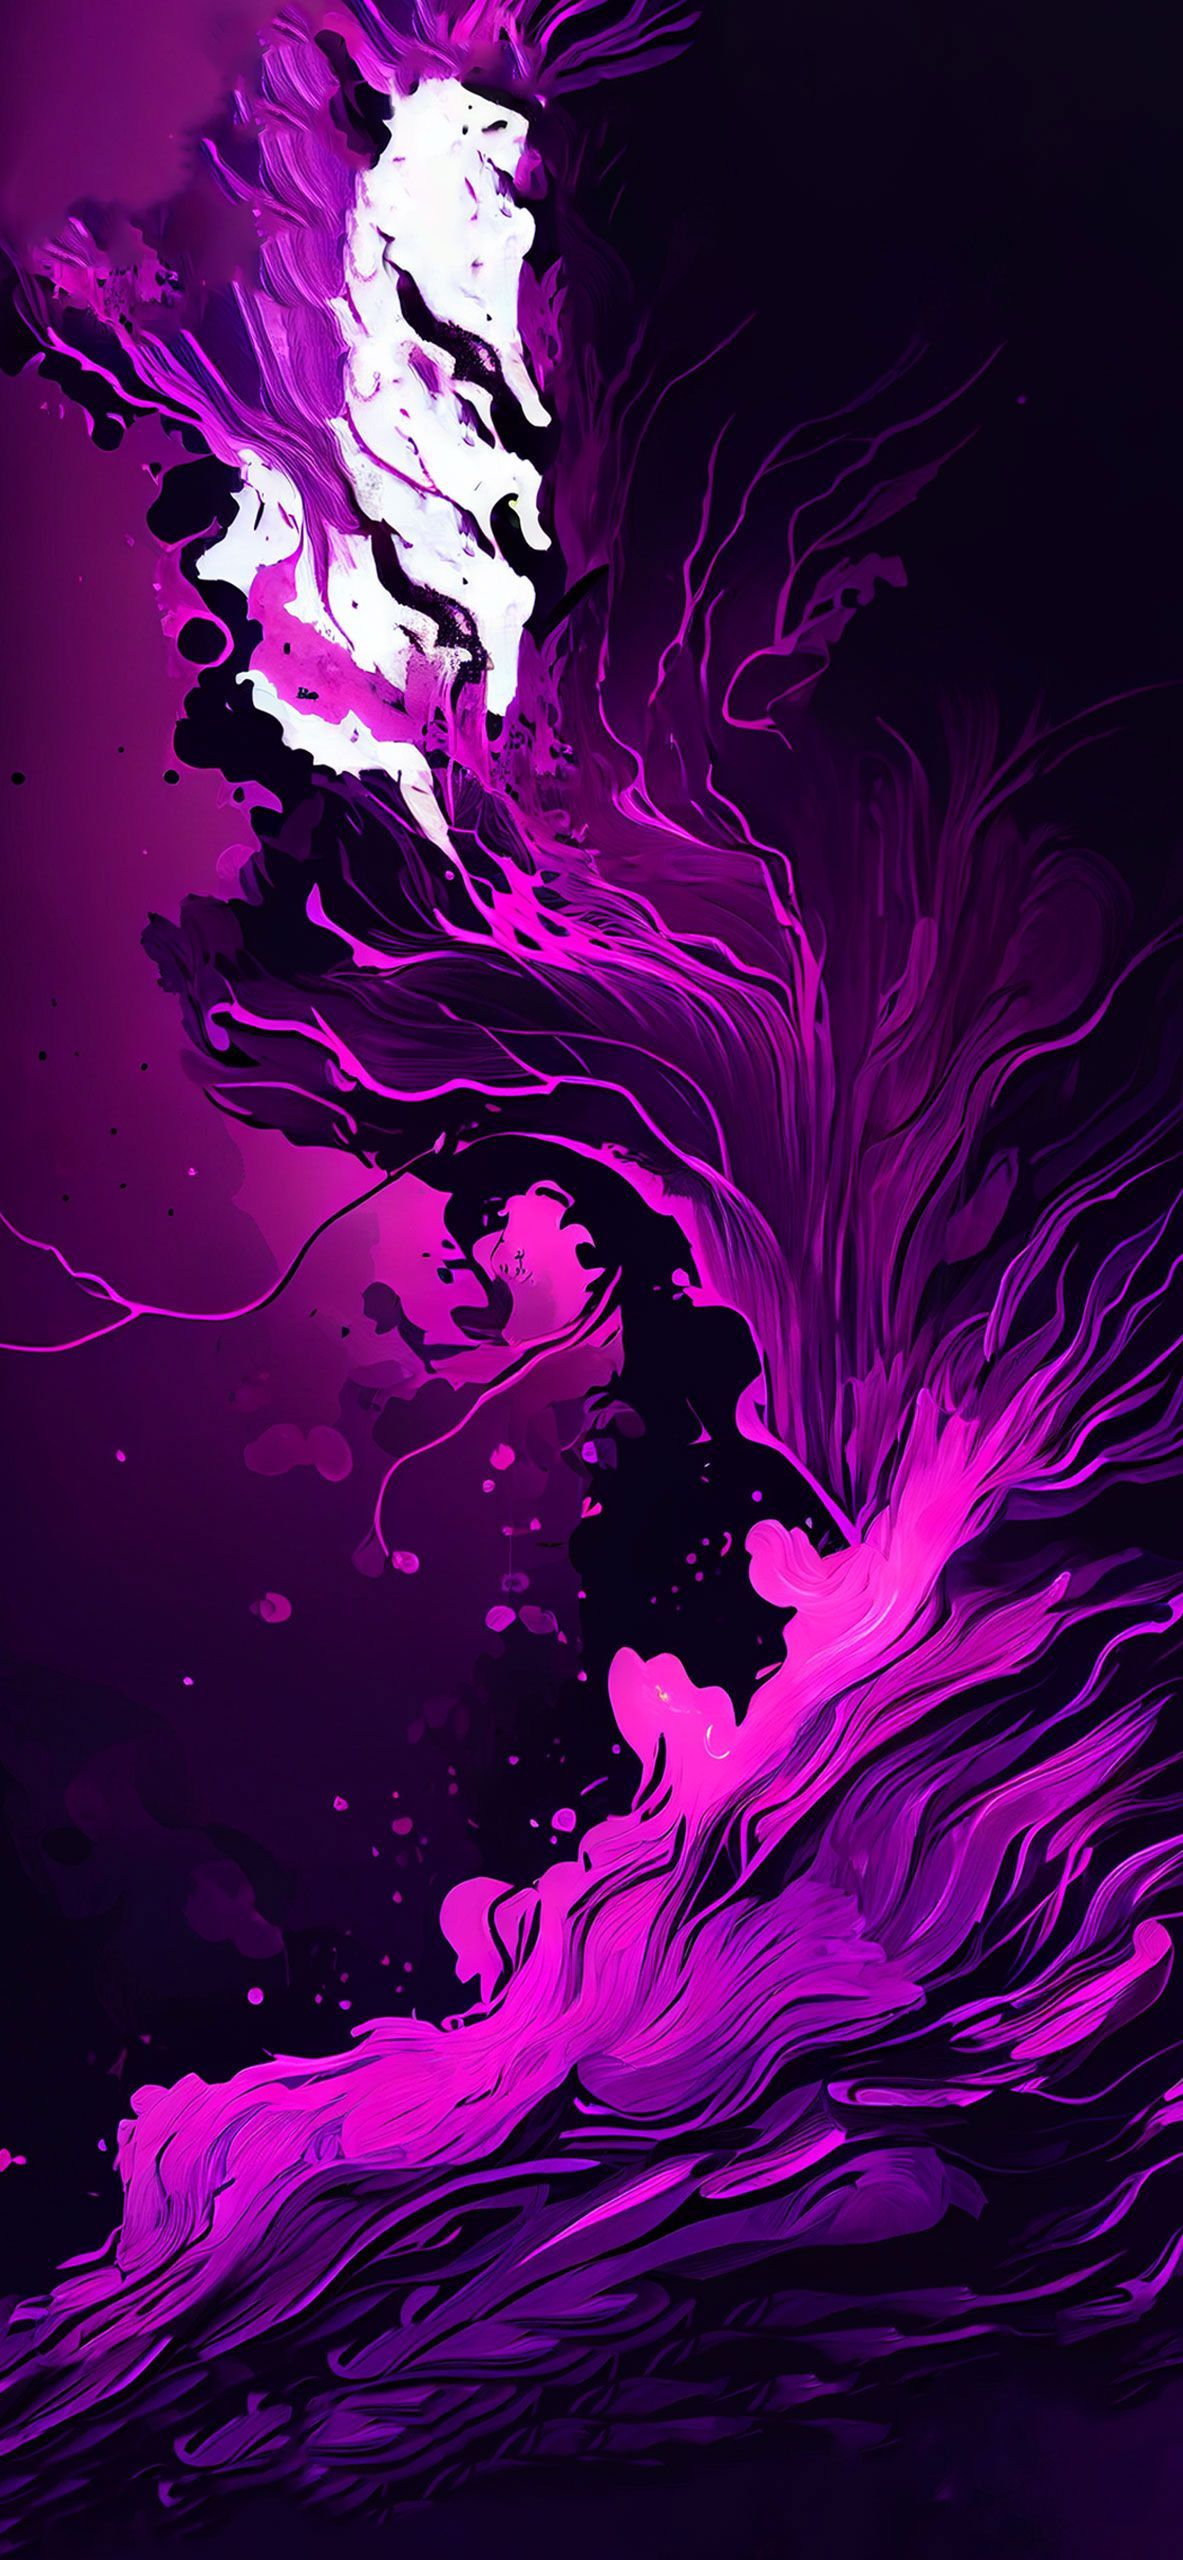 Aesthetic purple and black wallpaper for your phone - Violet, magenta, dark purple, purple